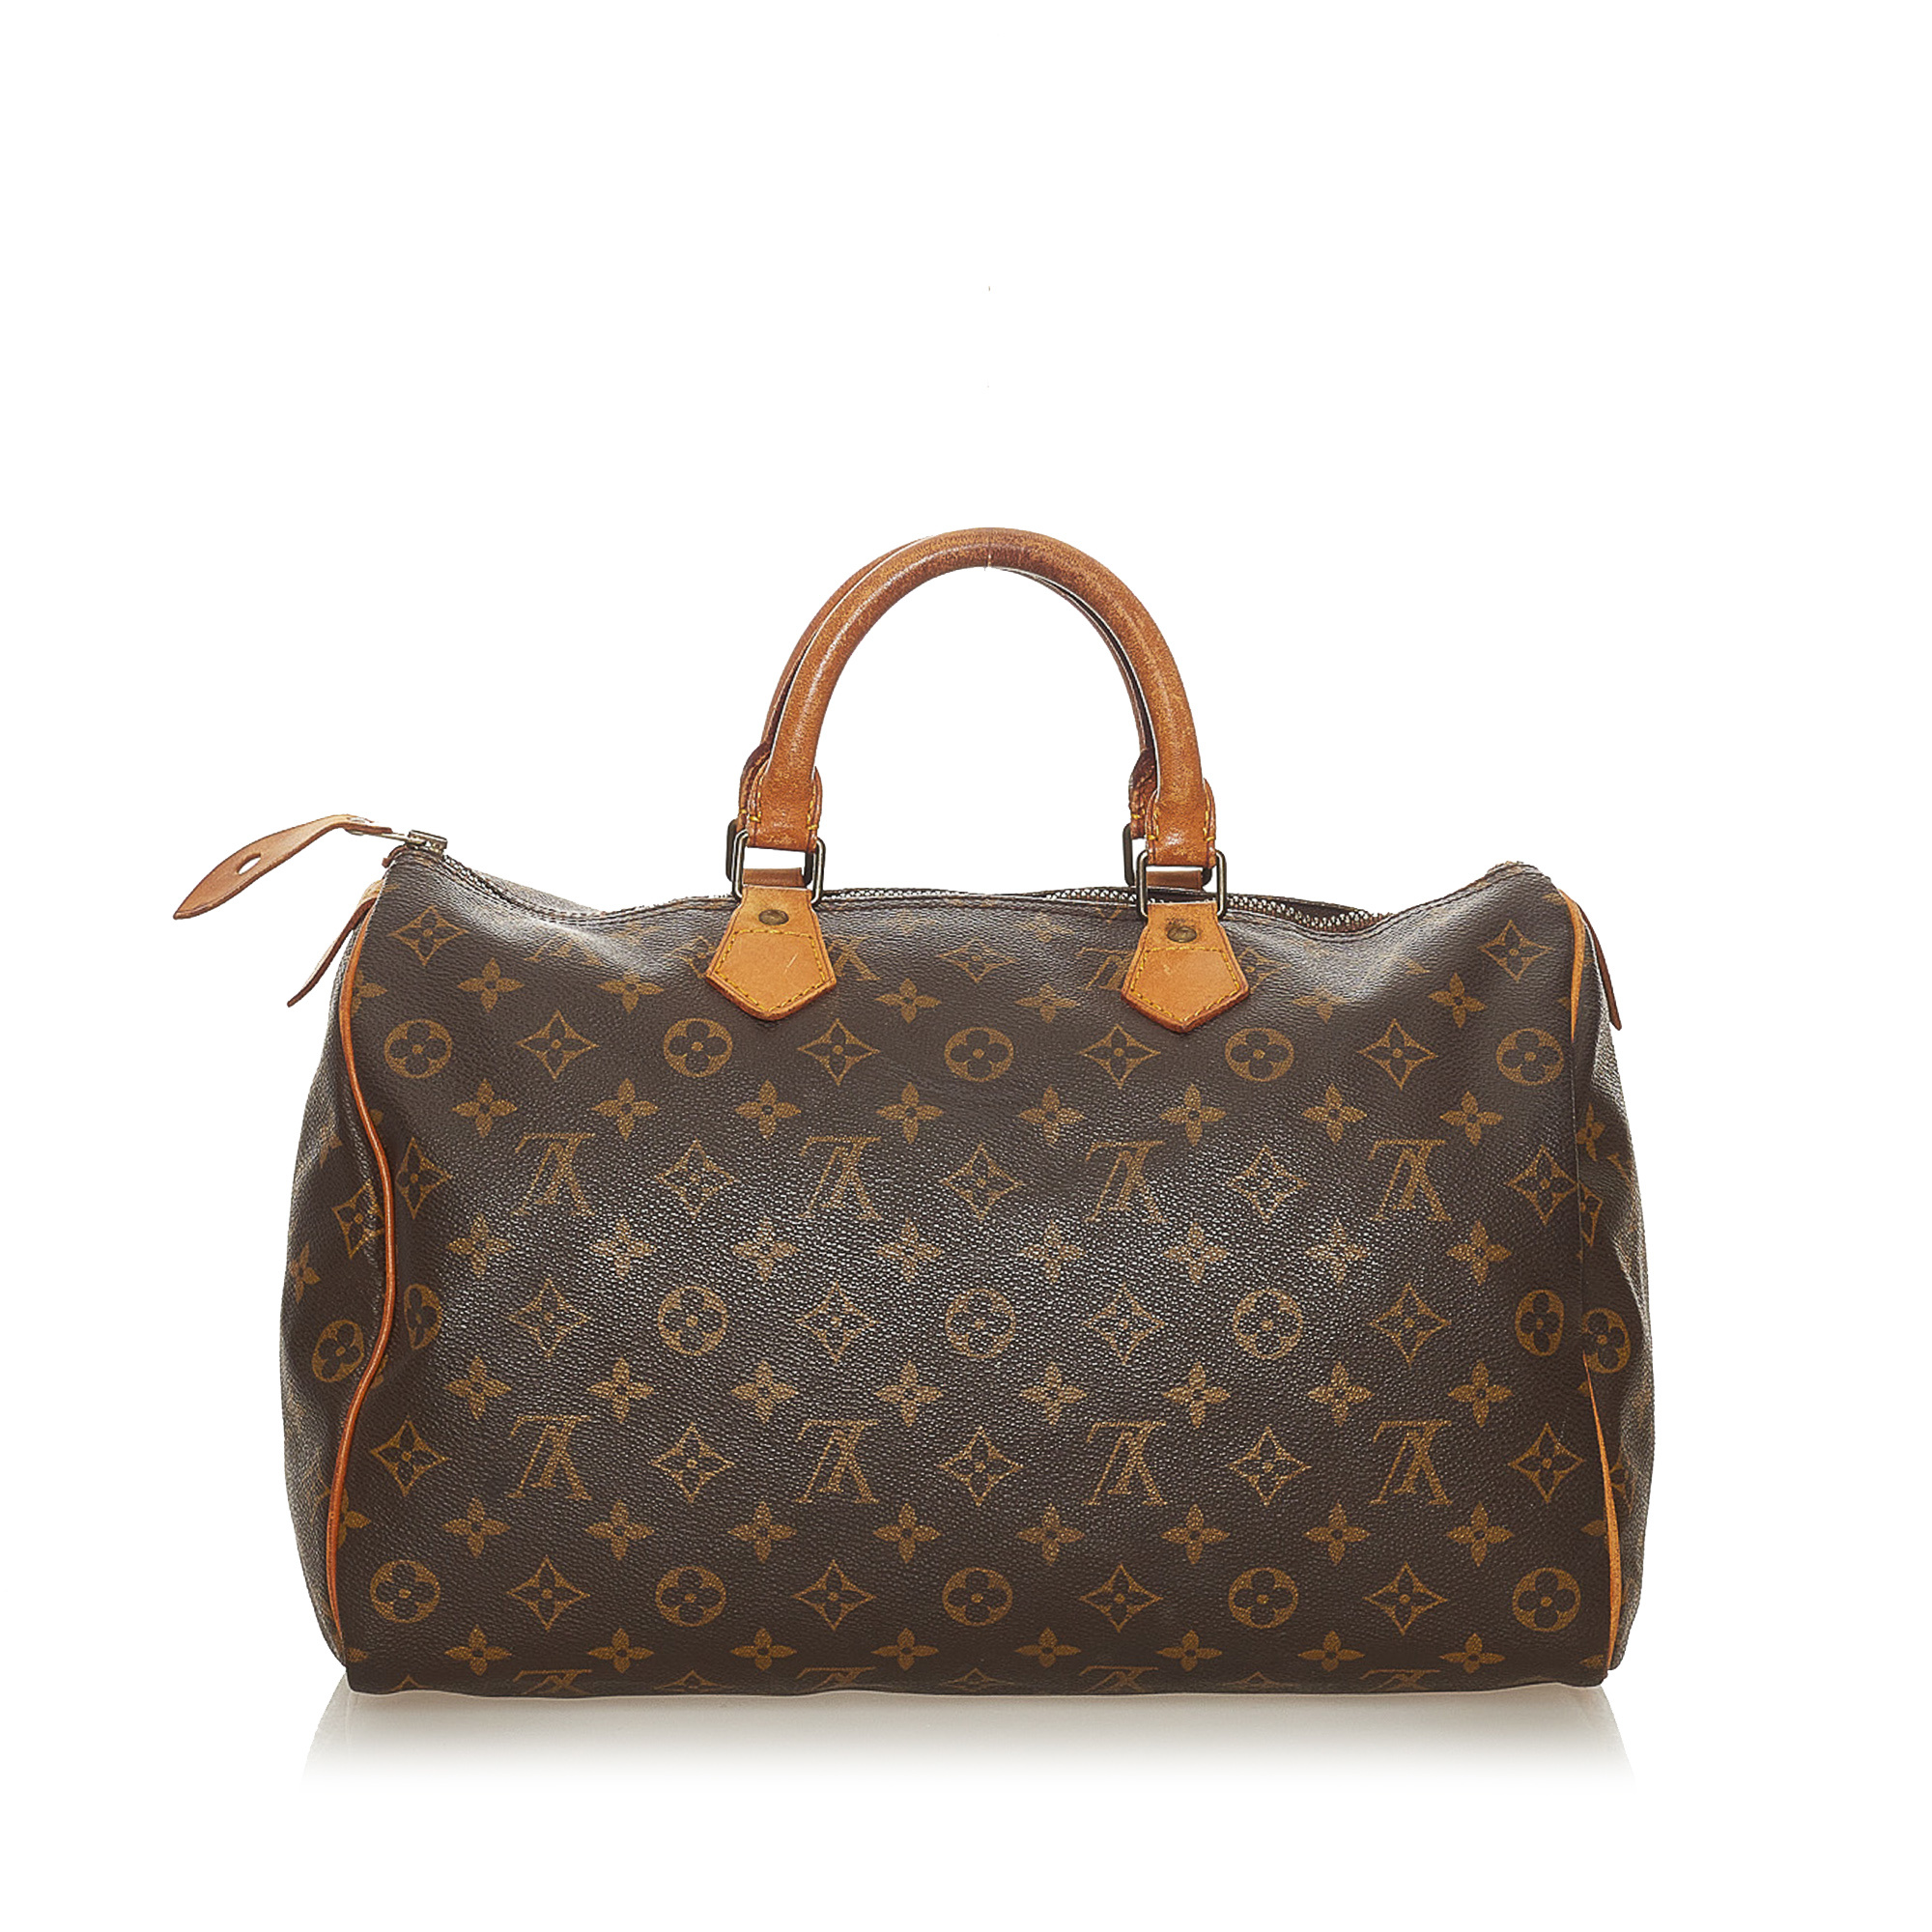 Louis Vuitton, Bags, Louis Vuitton Monogram Speedy 35